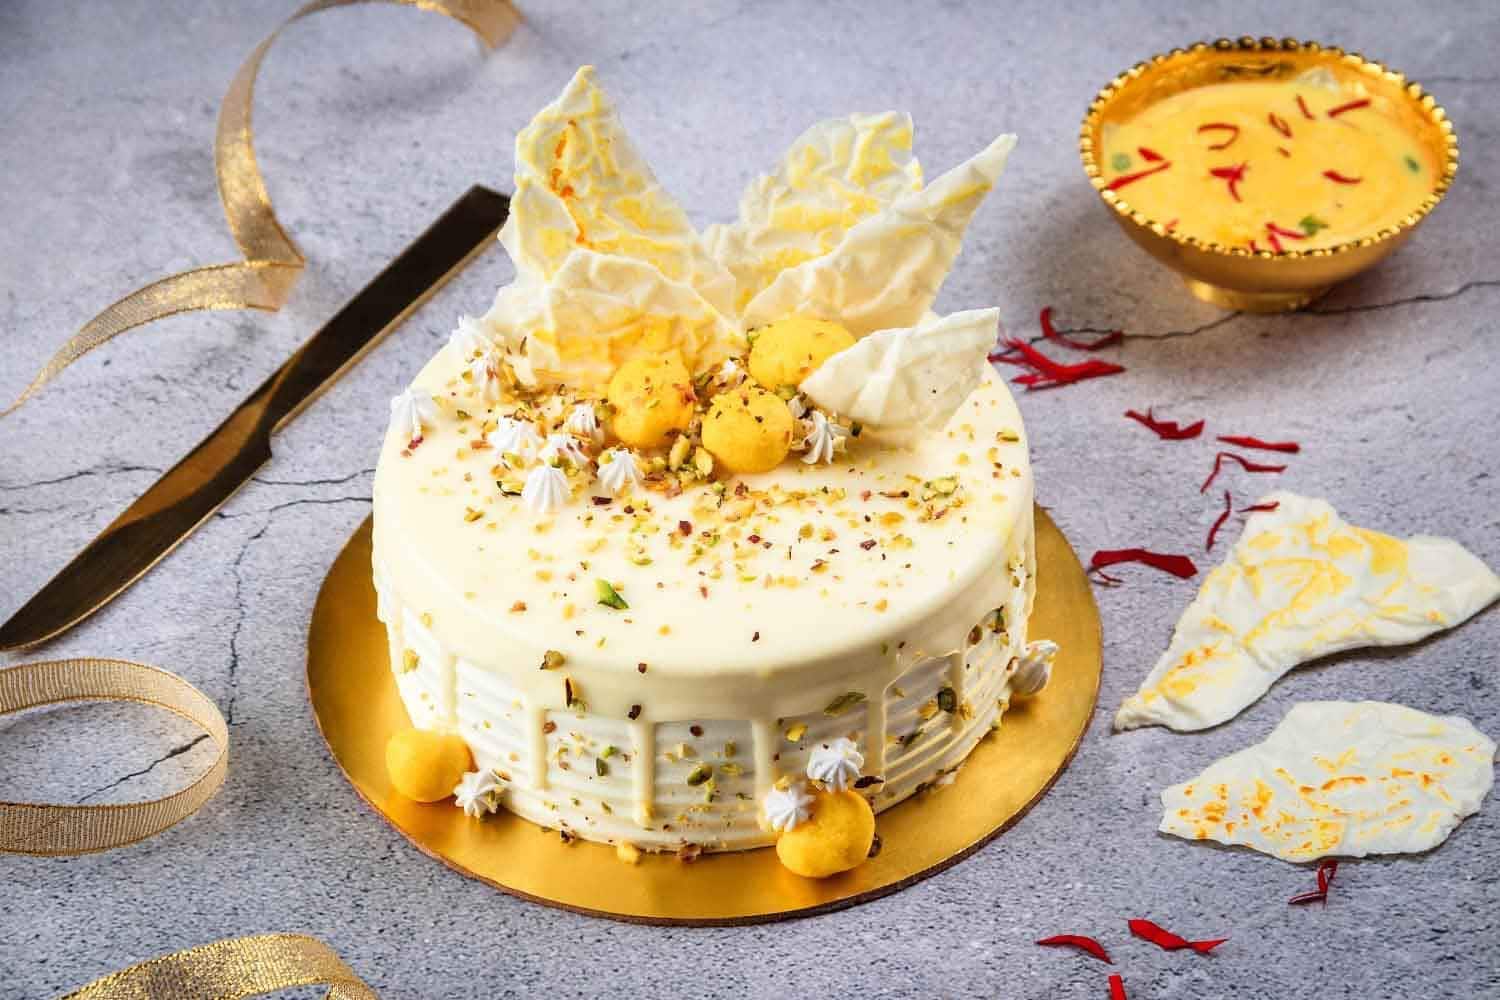 Online Cake & Flowers in Powai,Mumbai - Best Cake Shops in Mumbai - Justdial